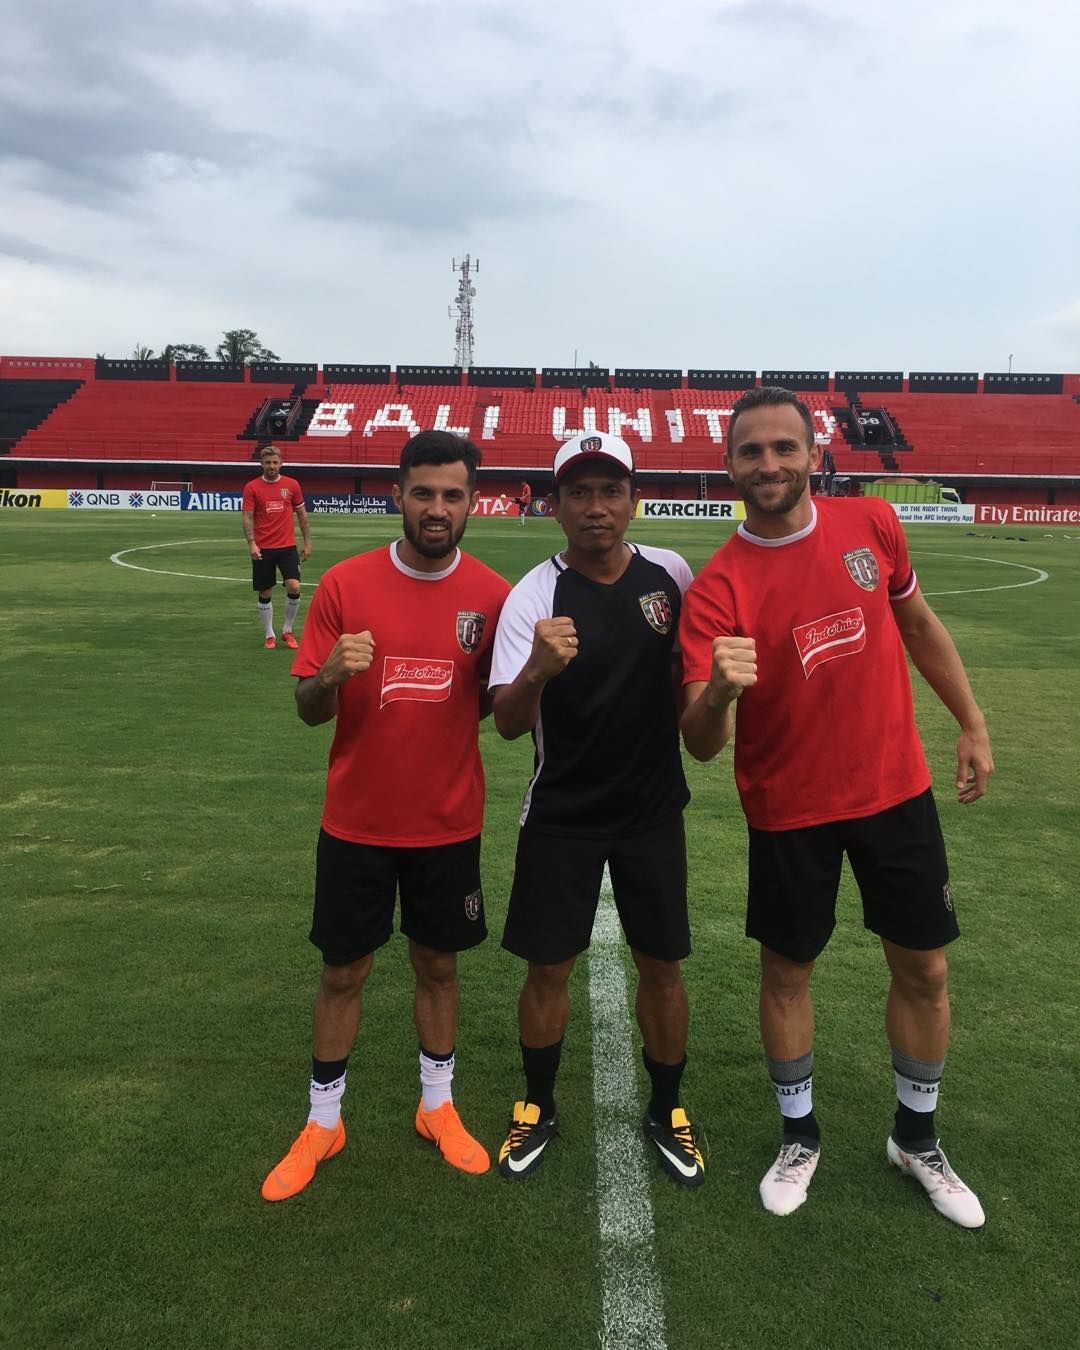 Bali United Vs Persita : PERSITA VS BALI UNITED Liga 1 2020 / PELATIH